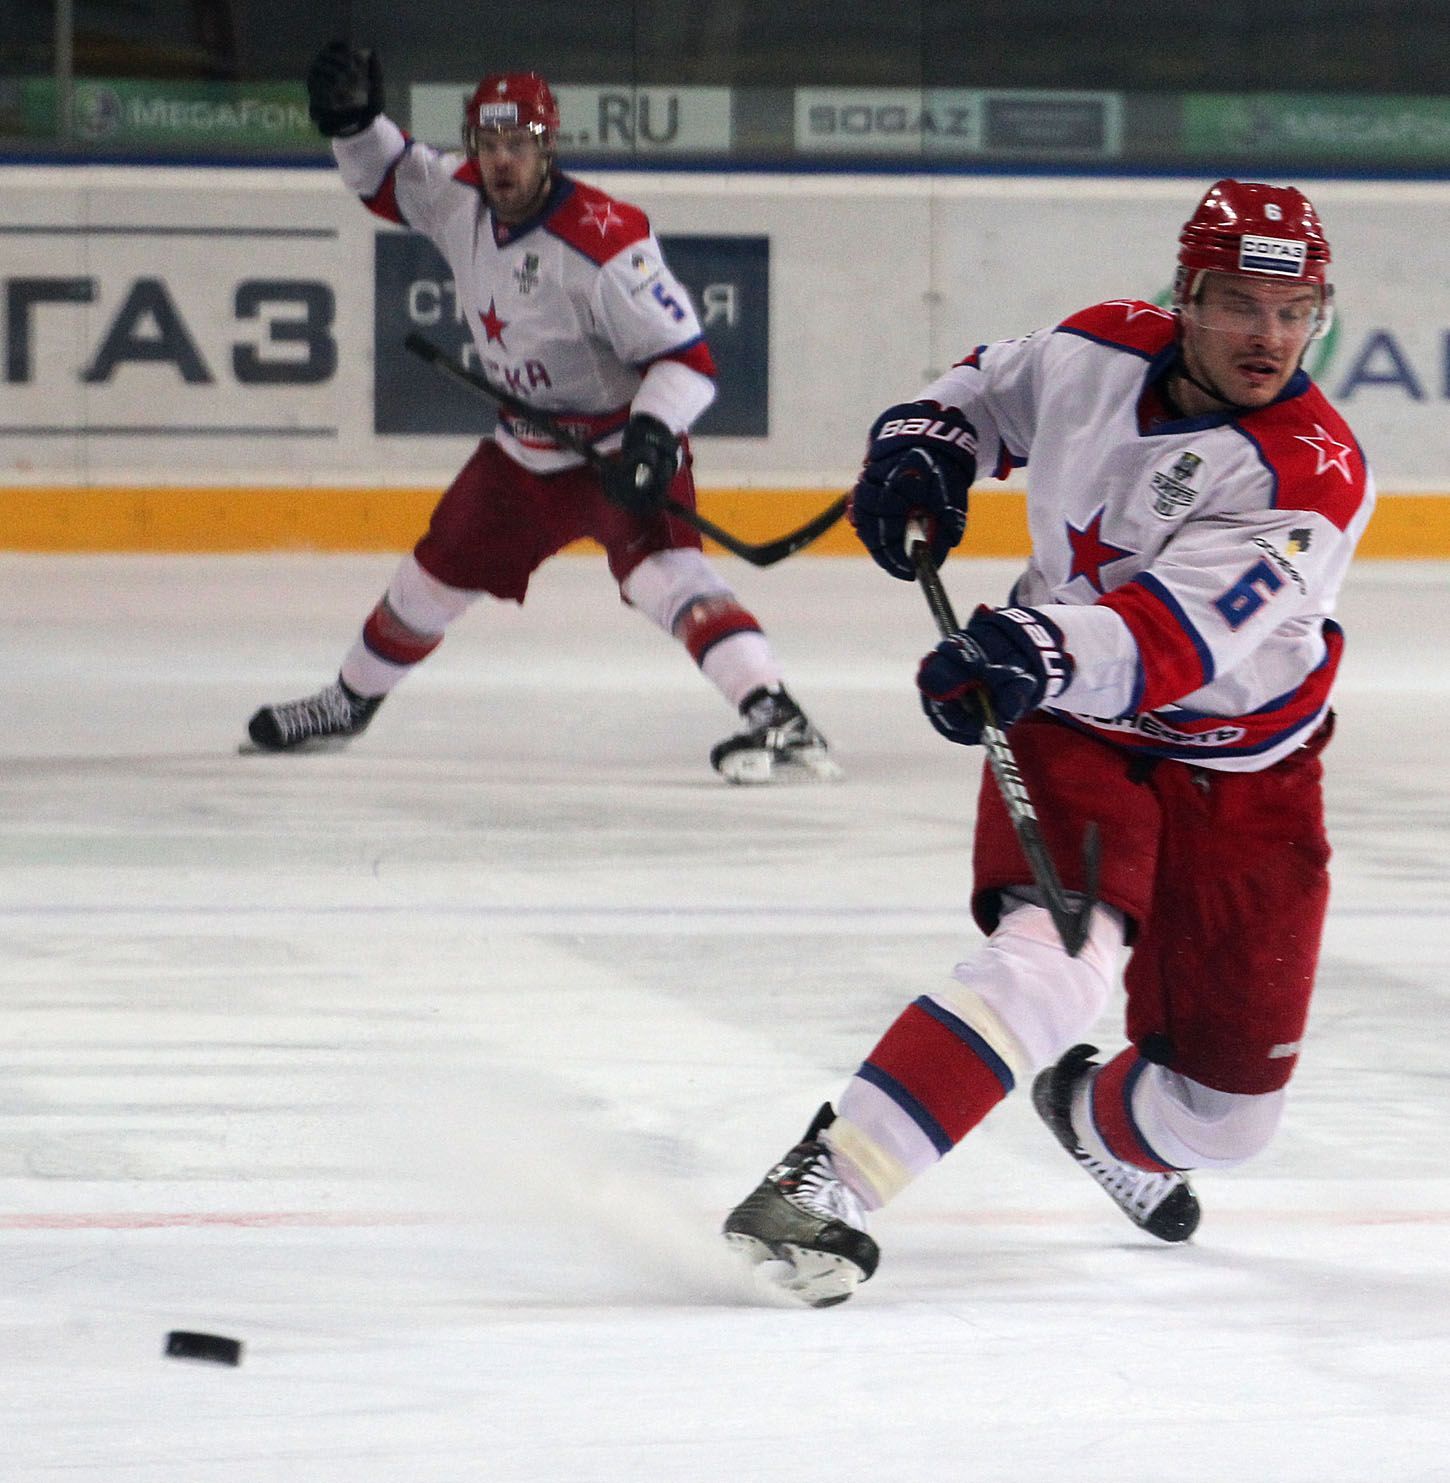 Hokej, KHL, Lev Praha - CSKA Moskva: Denis Denisov (6)